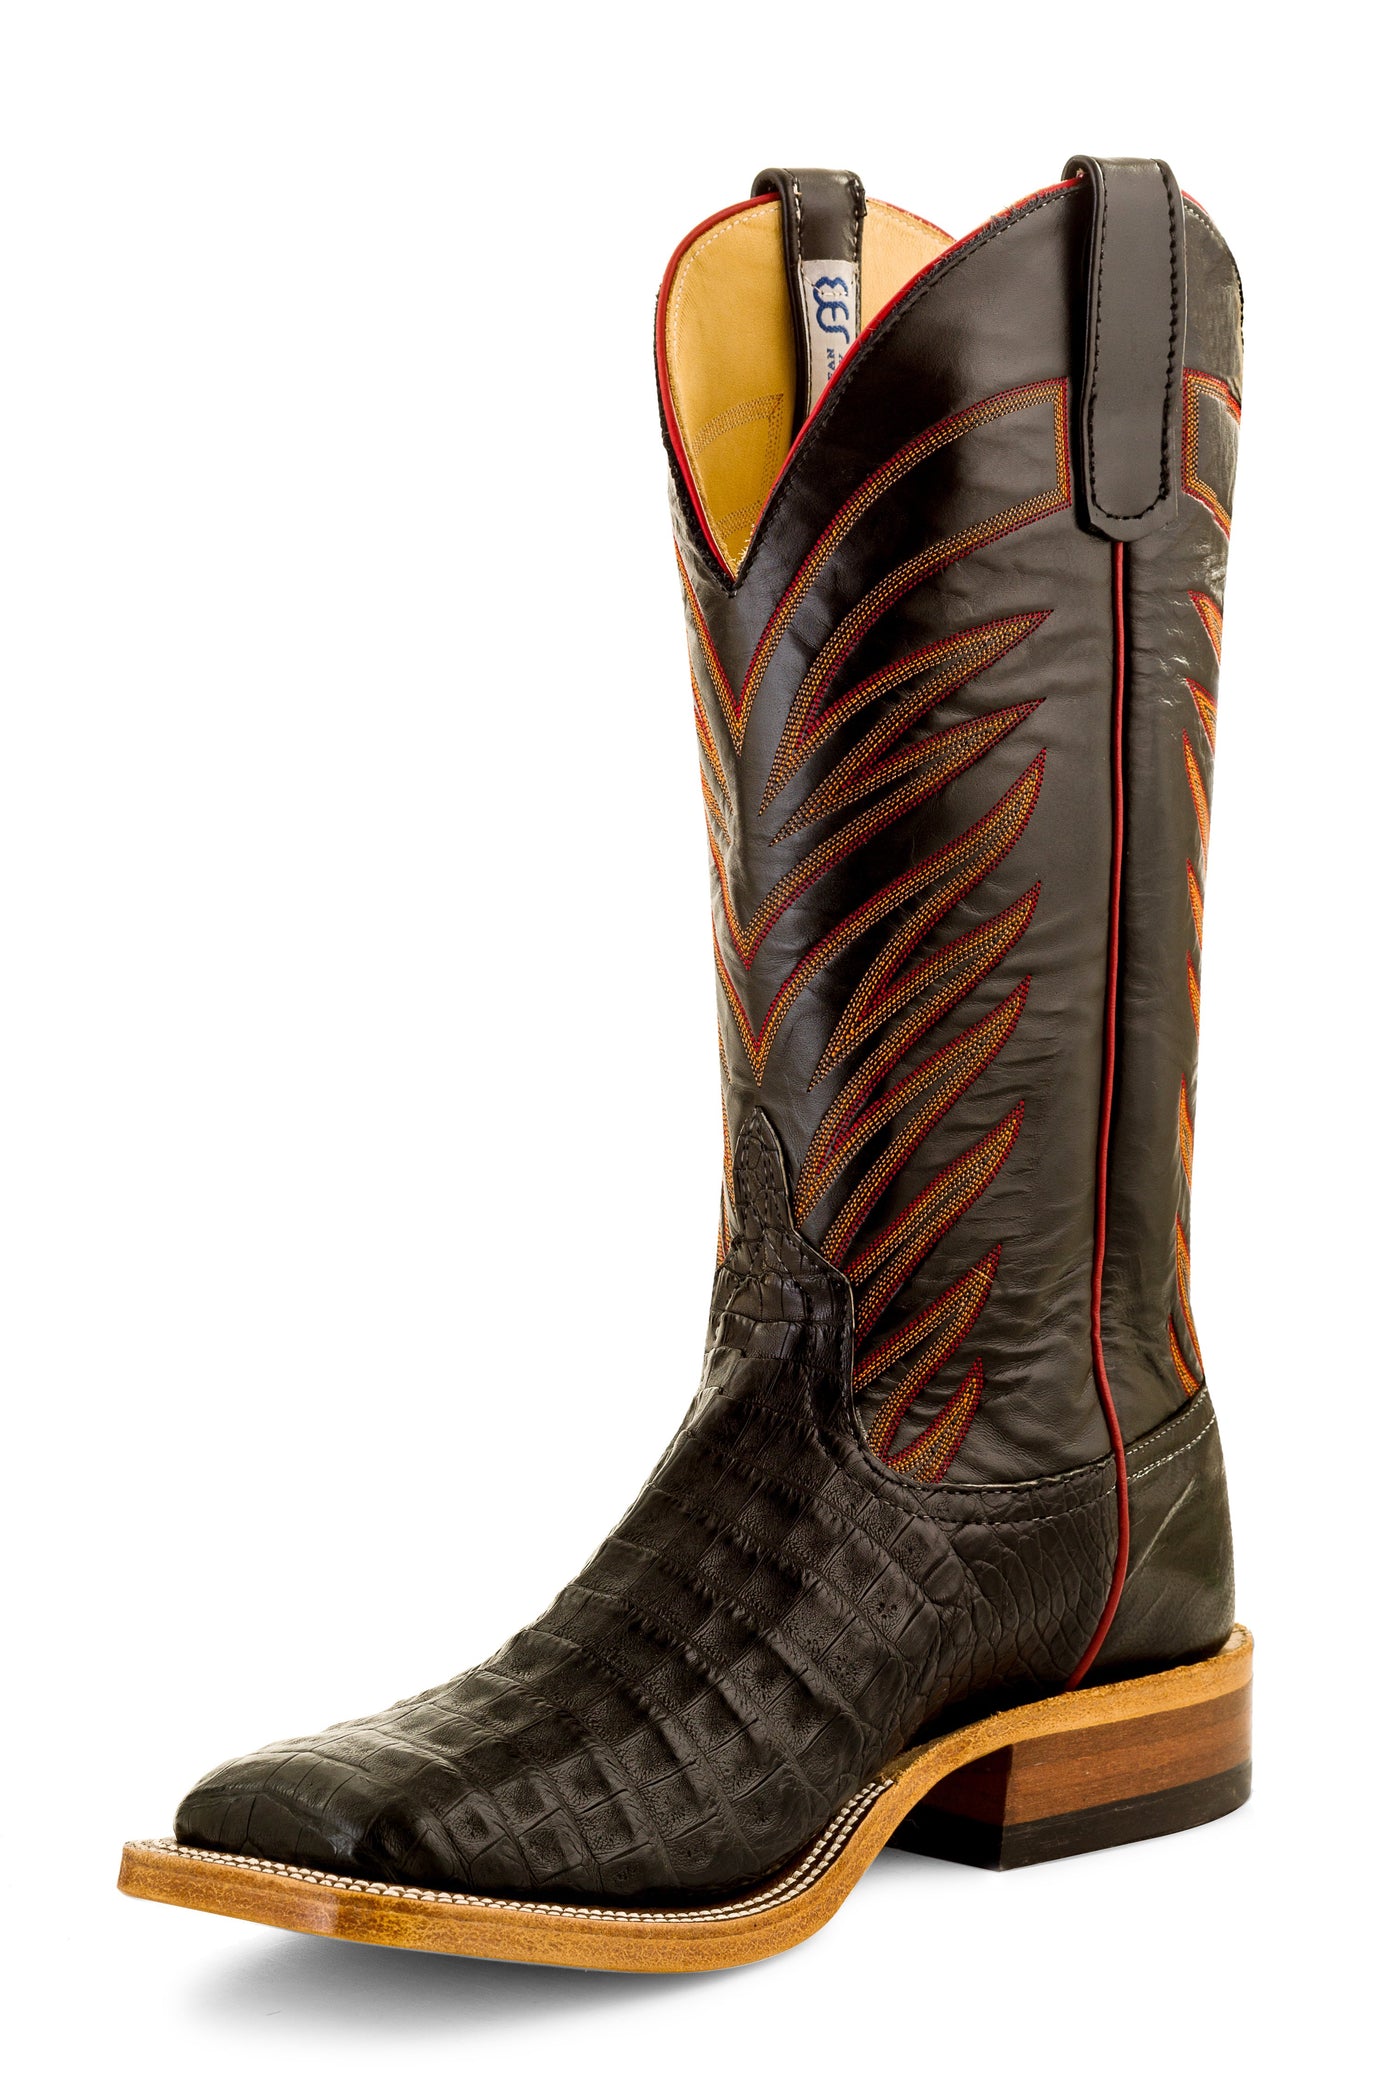 black caiman boots